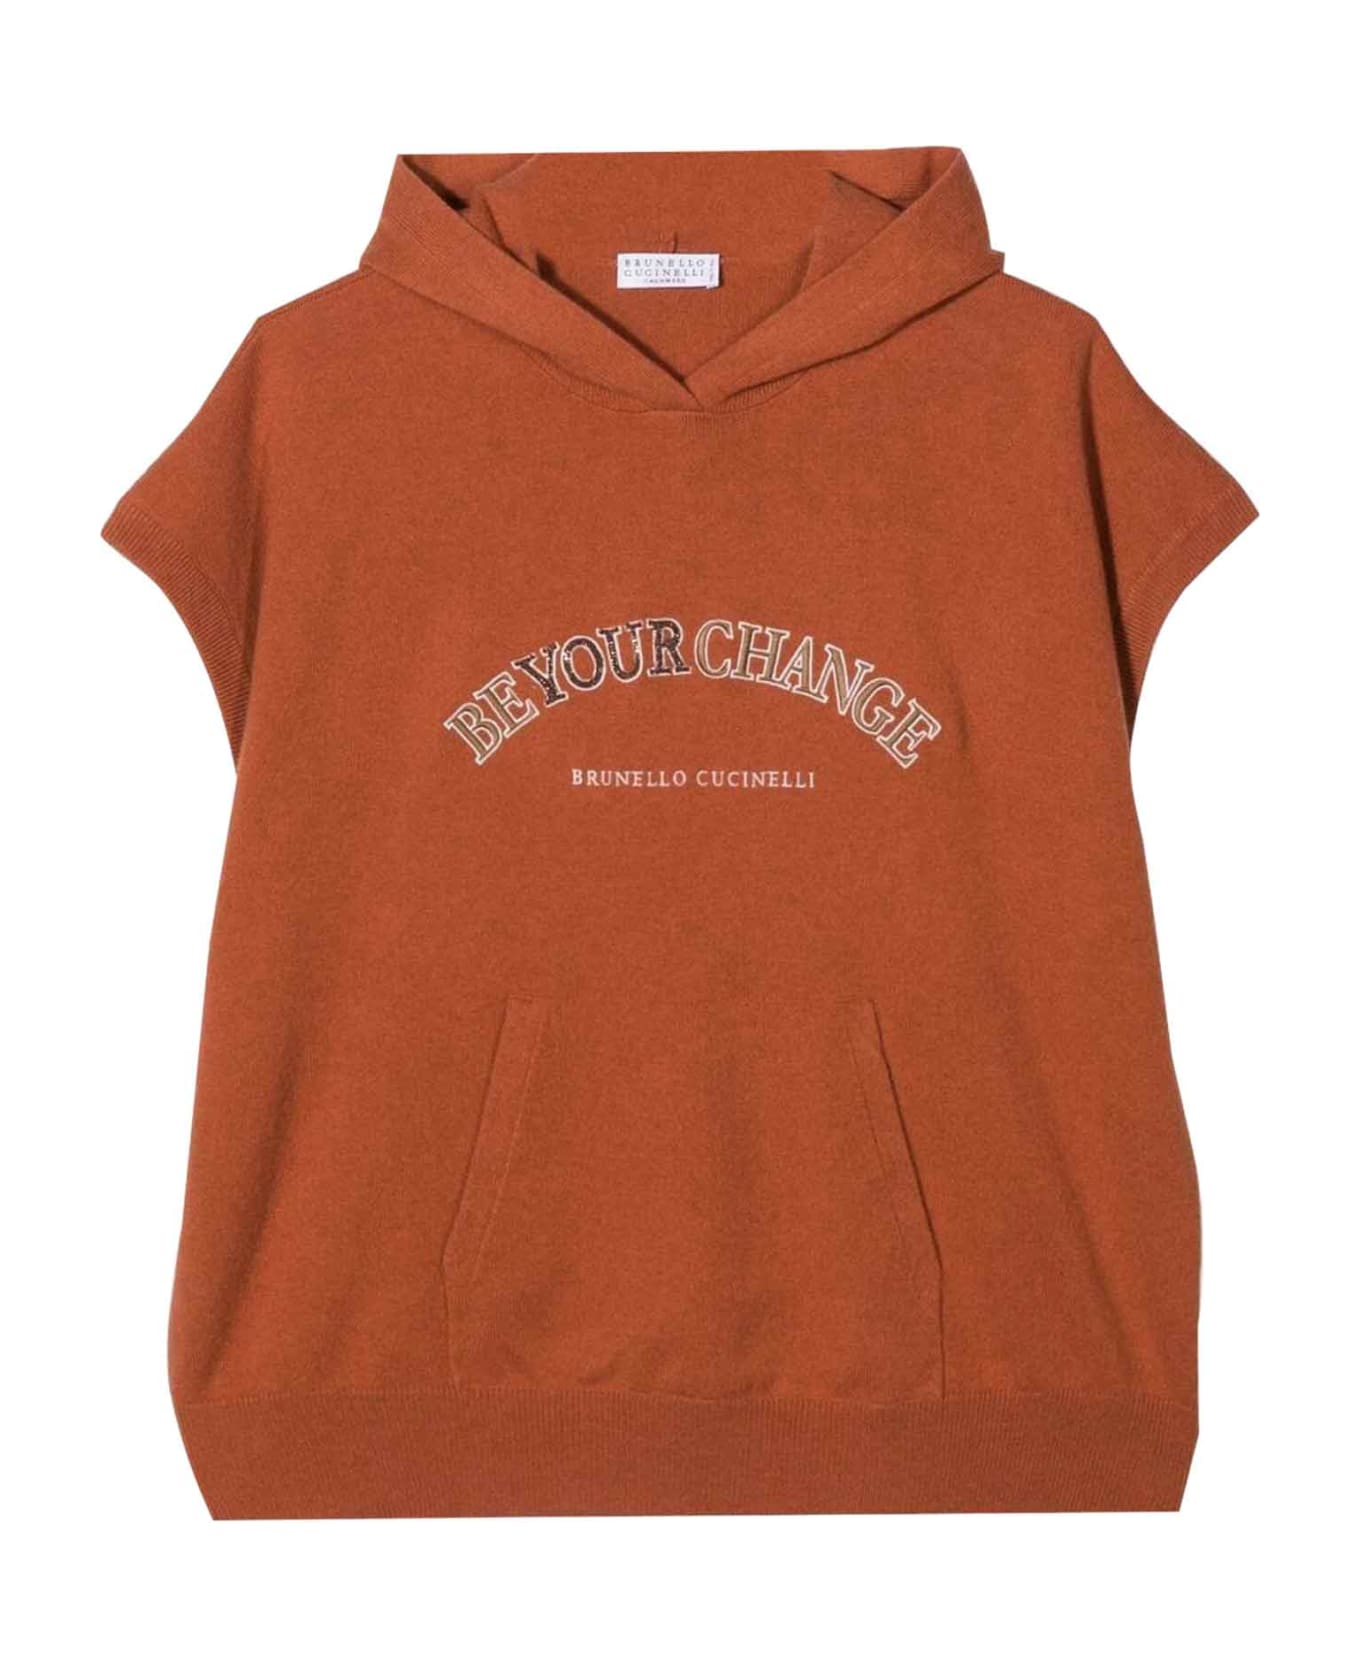 Brunello Cucinelli Orange Sweatshirt Teen Girl - Zenzero